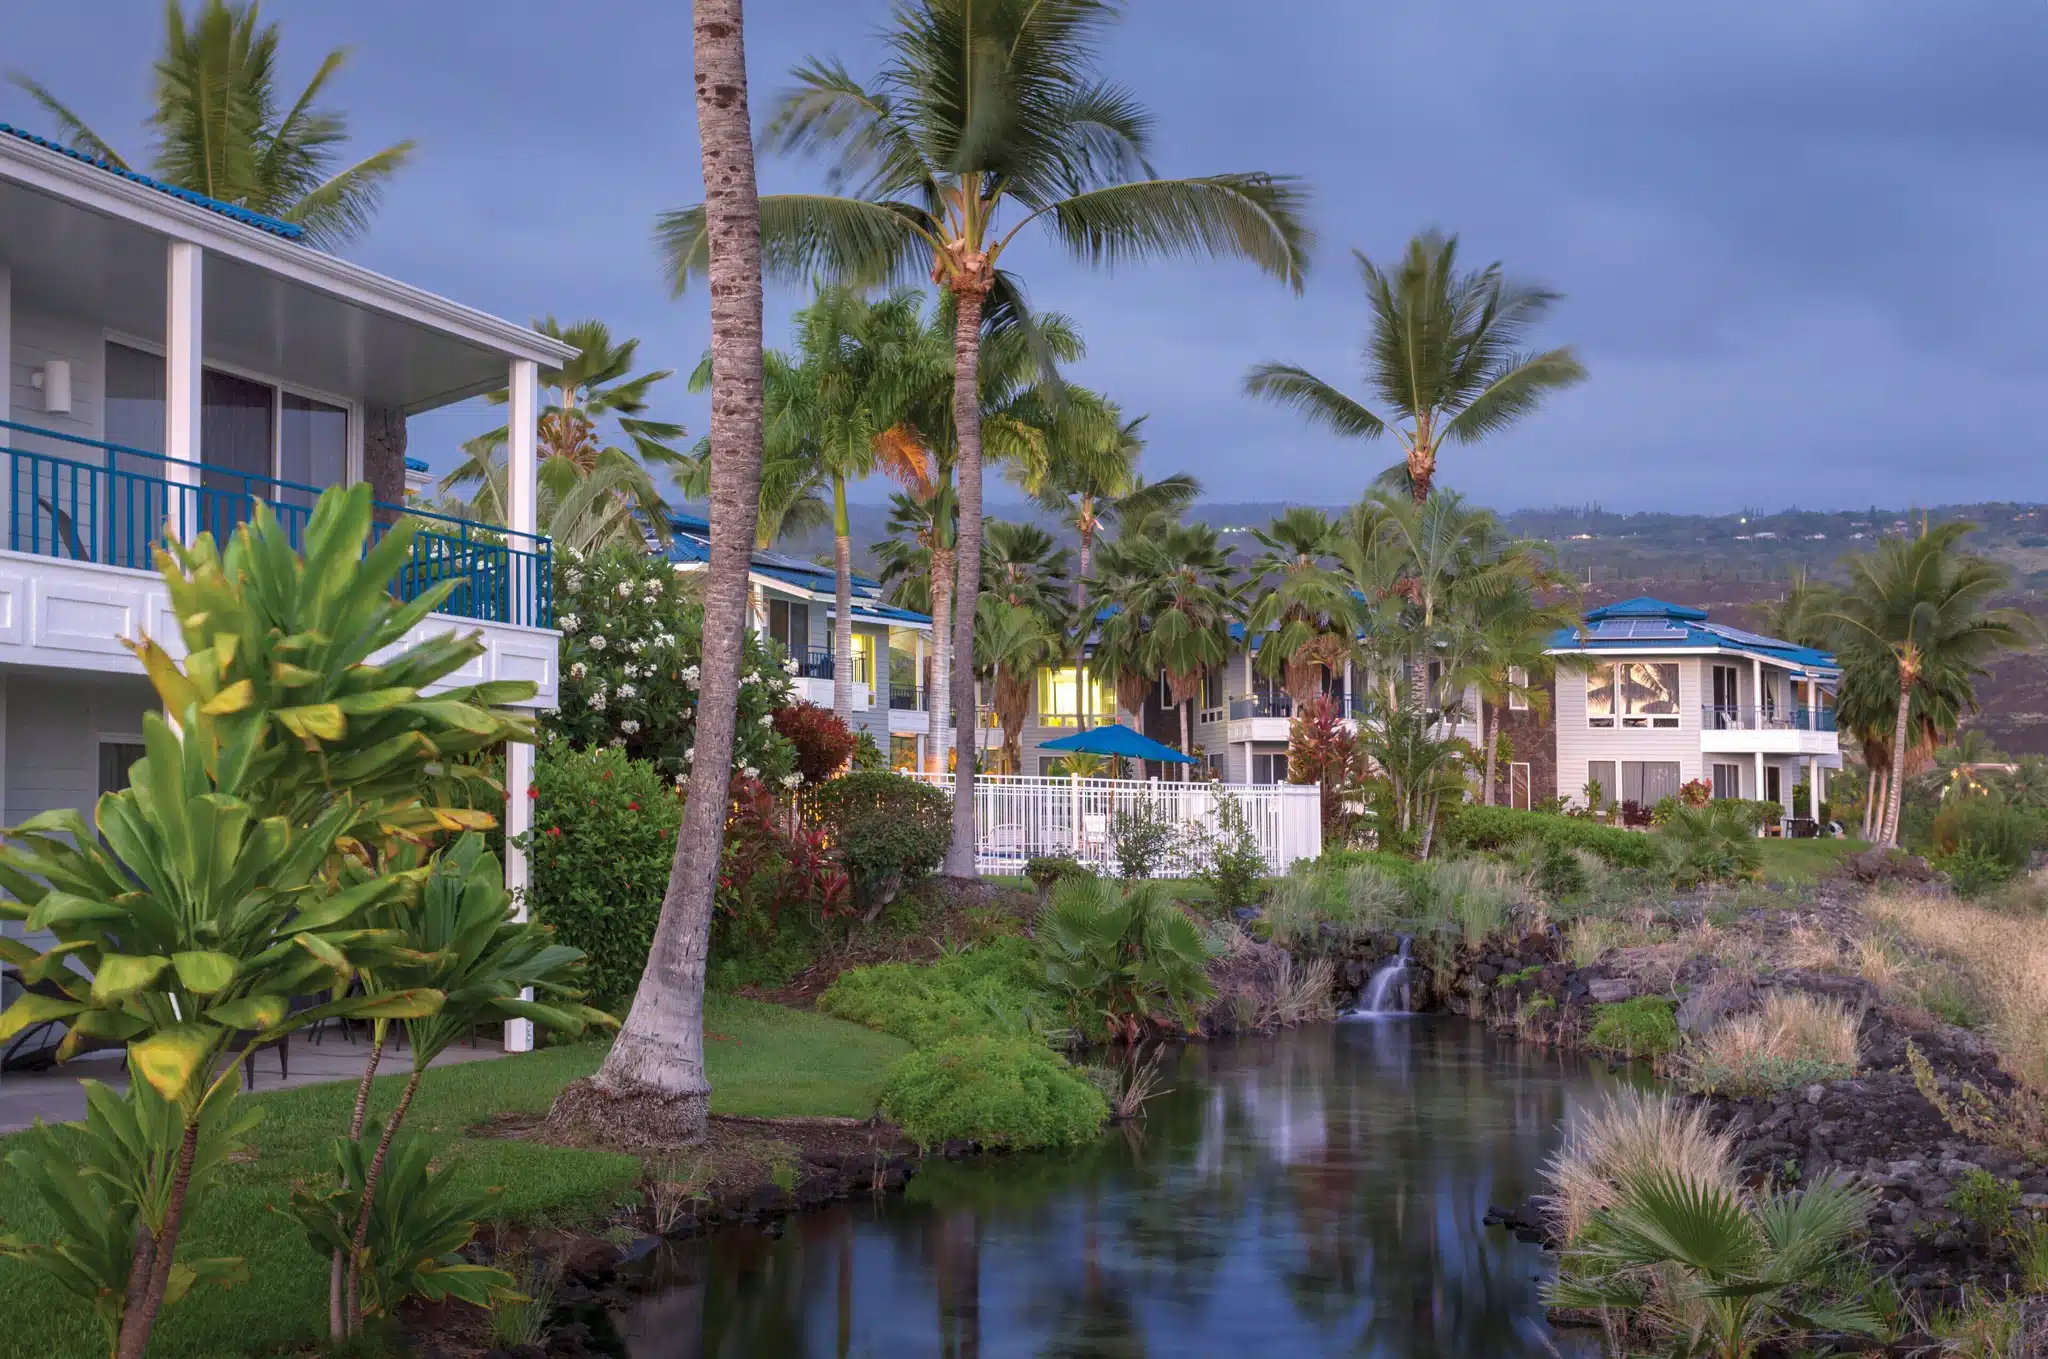 Club Wyndham Mauna Loa Village is a Hotel located in the city of Kailua-Kona on Big Island, Hawaii